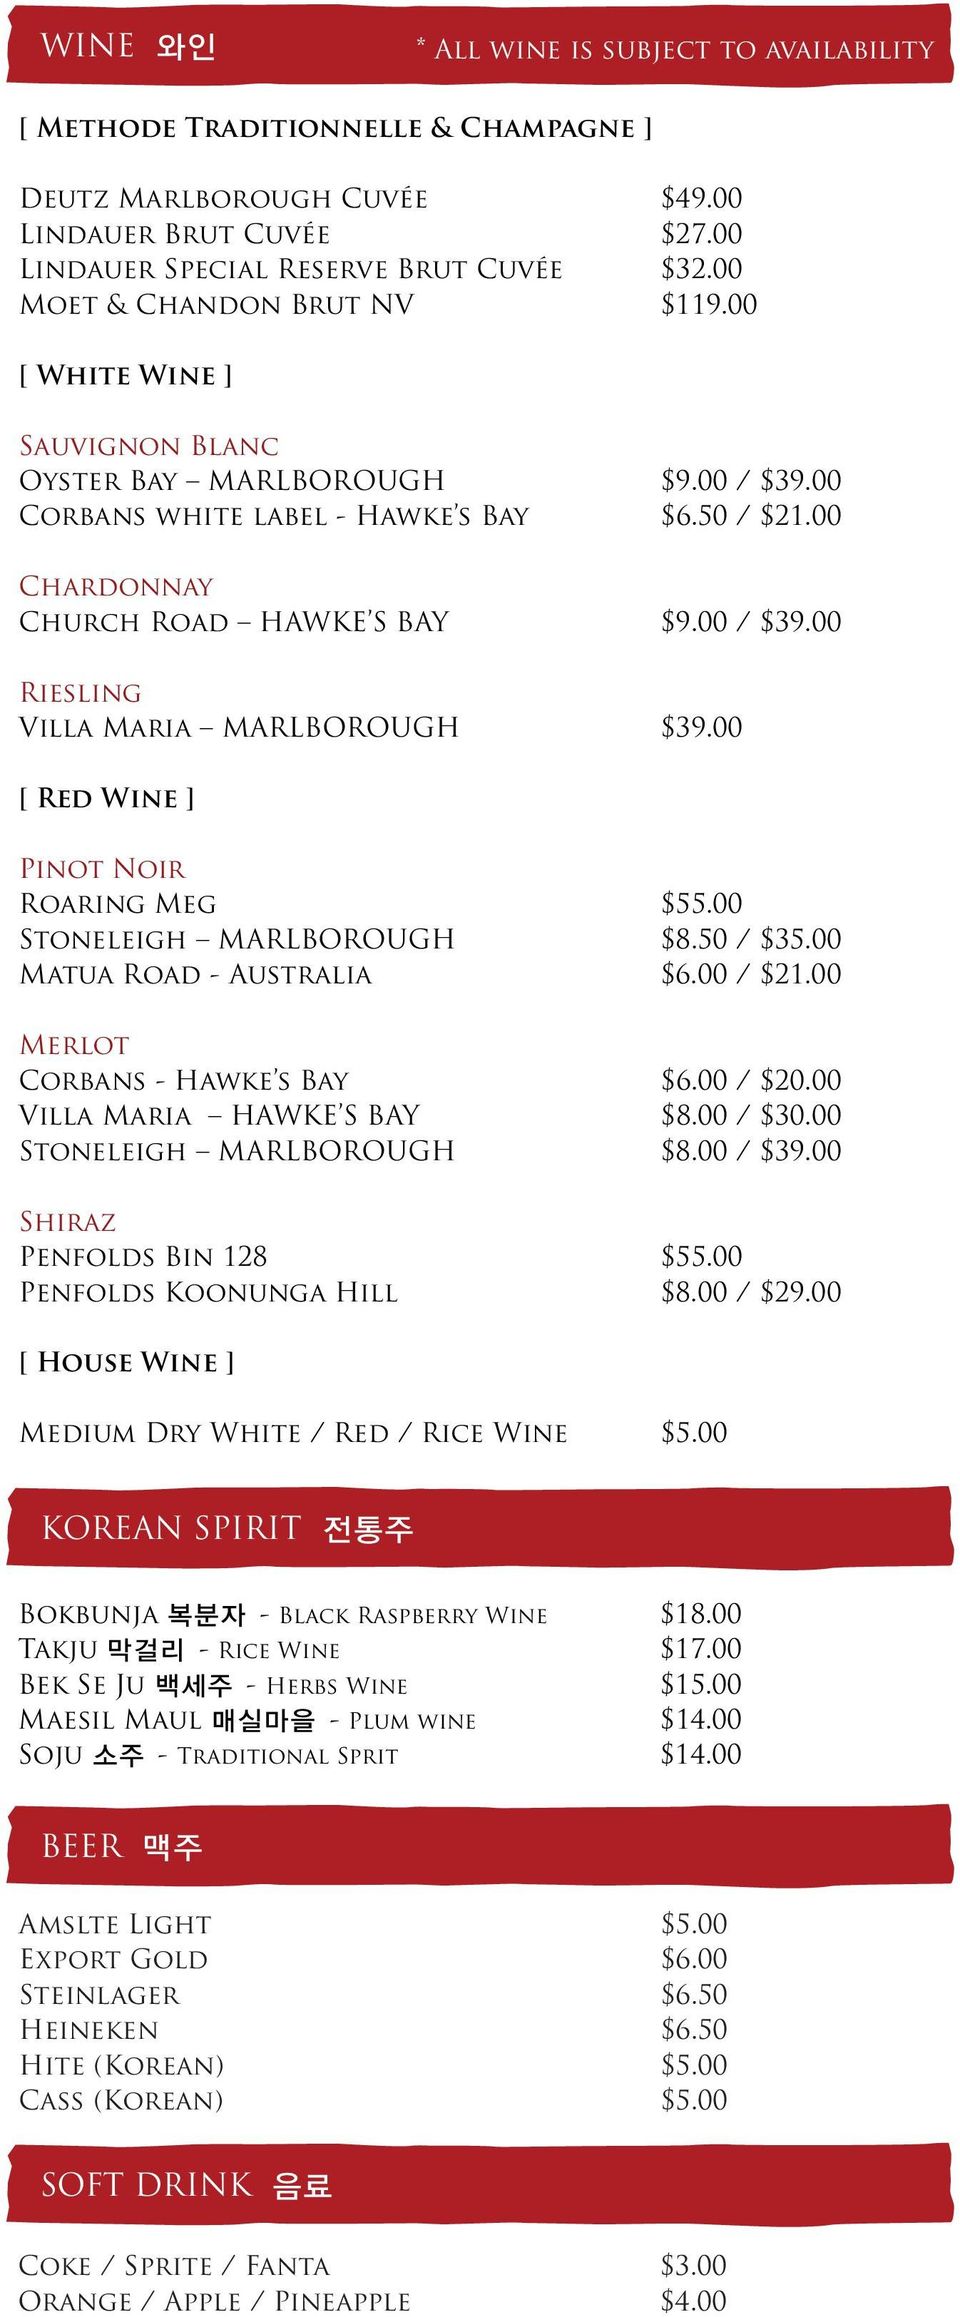 00 [ Red Wine ] Pinot Noir Roaring Meg $55.00 Stoneleigh MARLBOROUGH $8.50 / $35.00 Matua Road - Australia $6.00 / $21.00 Merlot Corbans - Hawke s Bay $6.00 / $20.00 Villa Maria HAWKE S BAY $8.